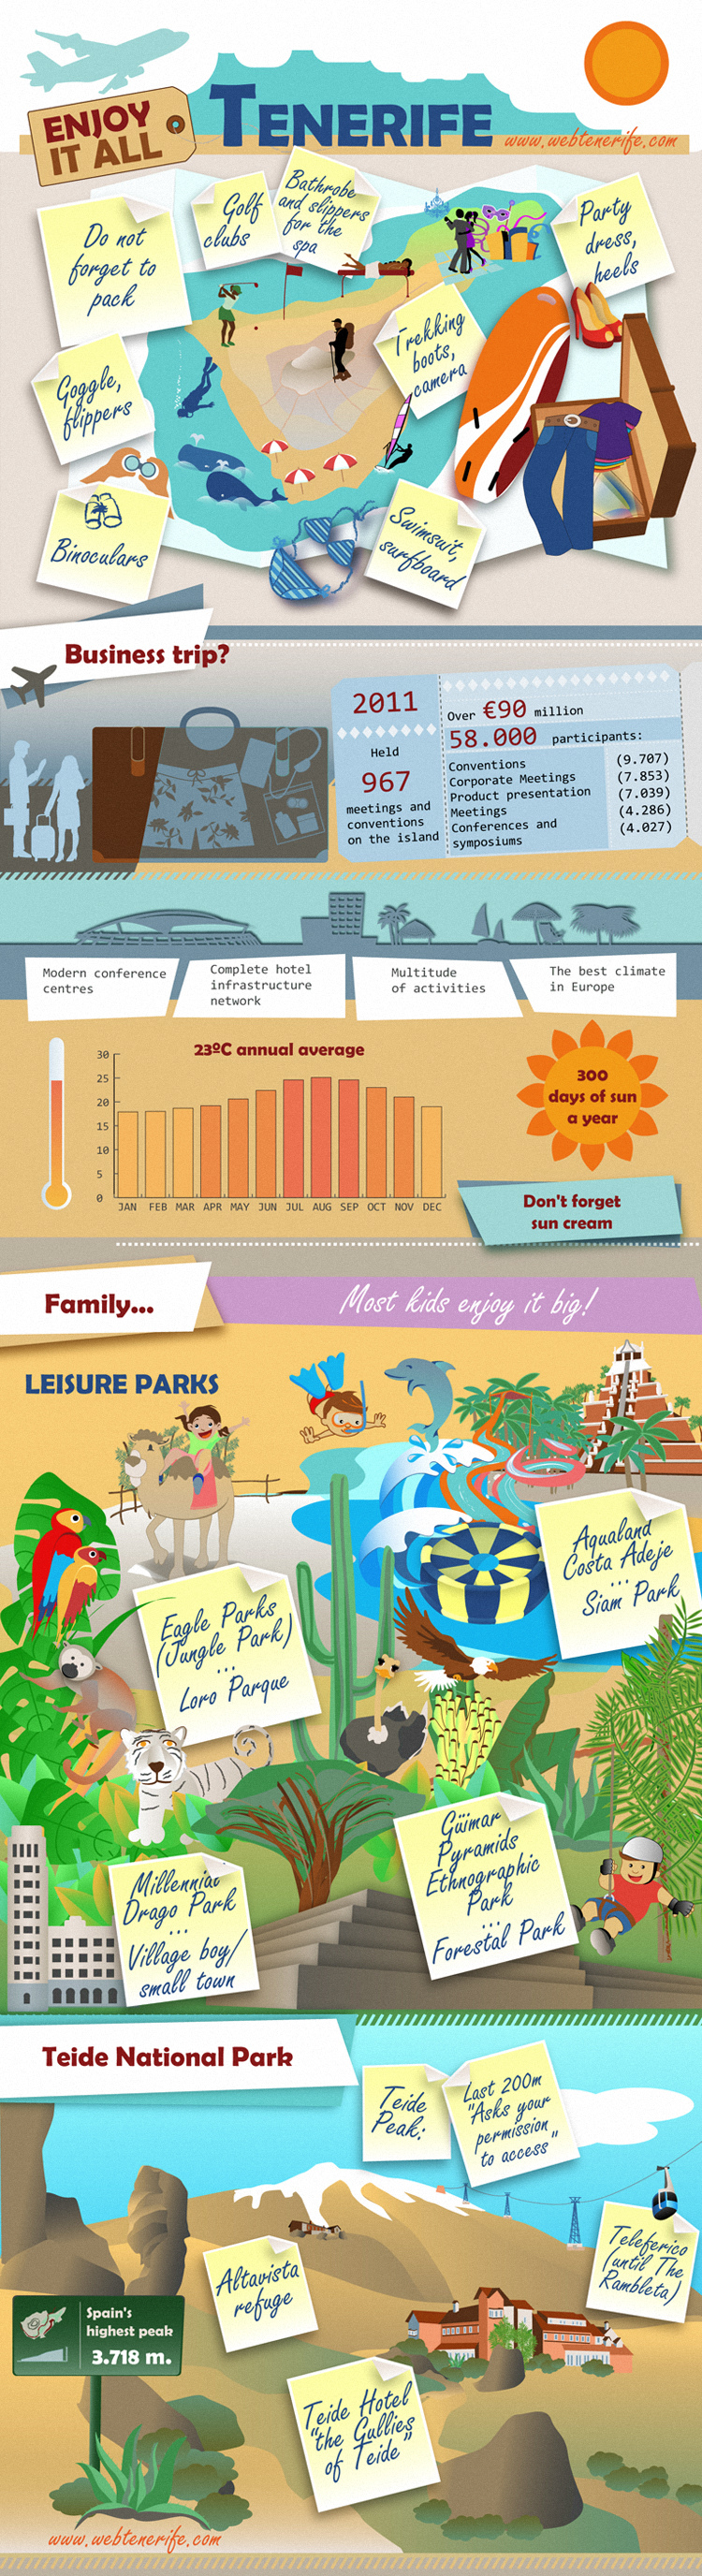 Tenerife- an island to enjoy (Infographic)